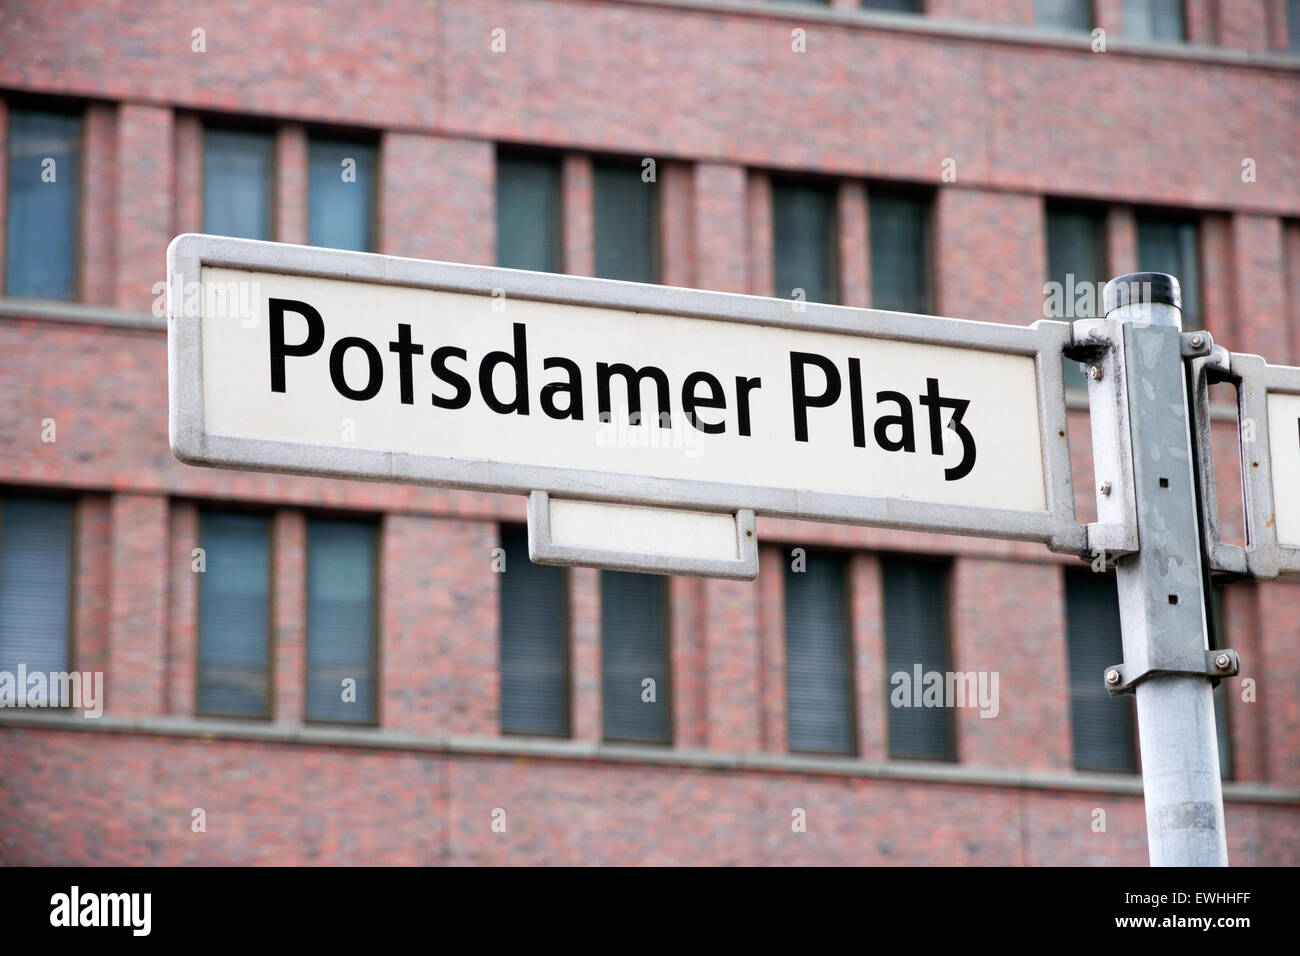 Potsdamer Platz sign in Berlin, Germany Stock Photo